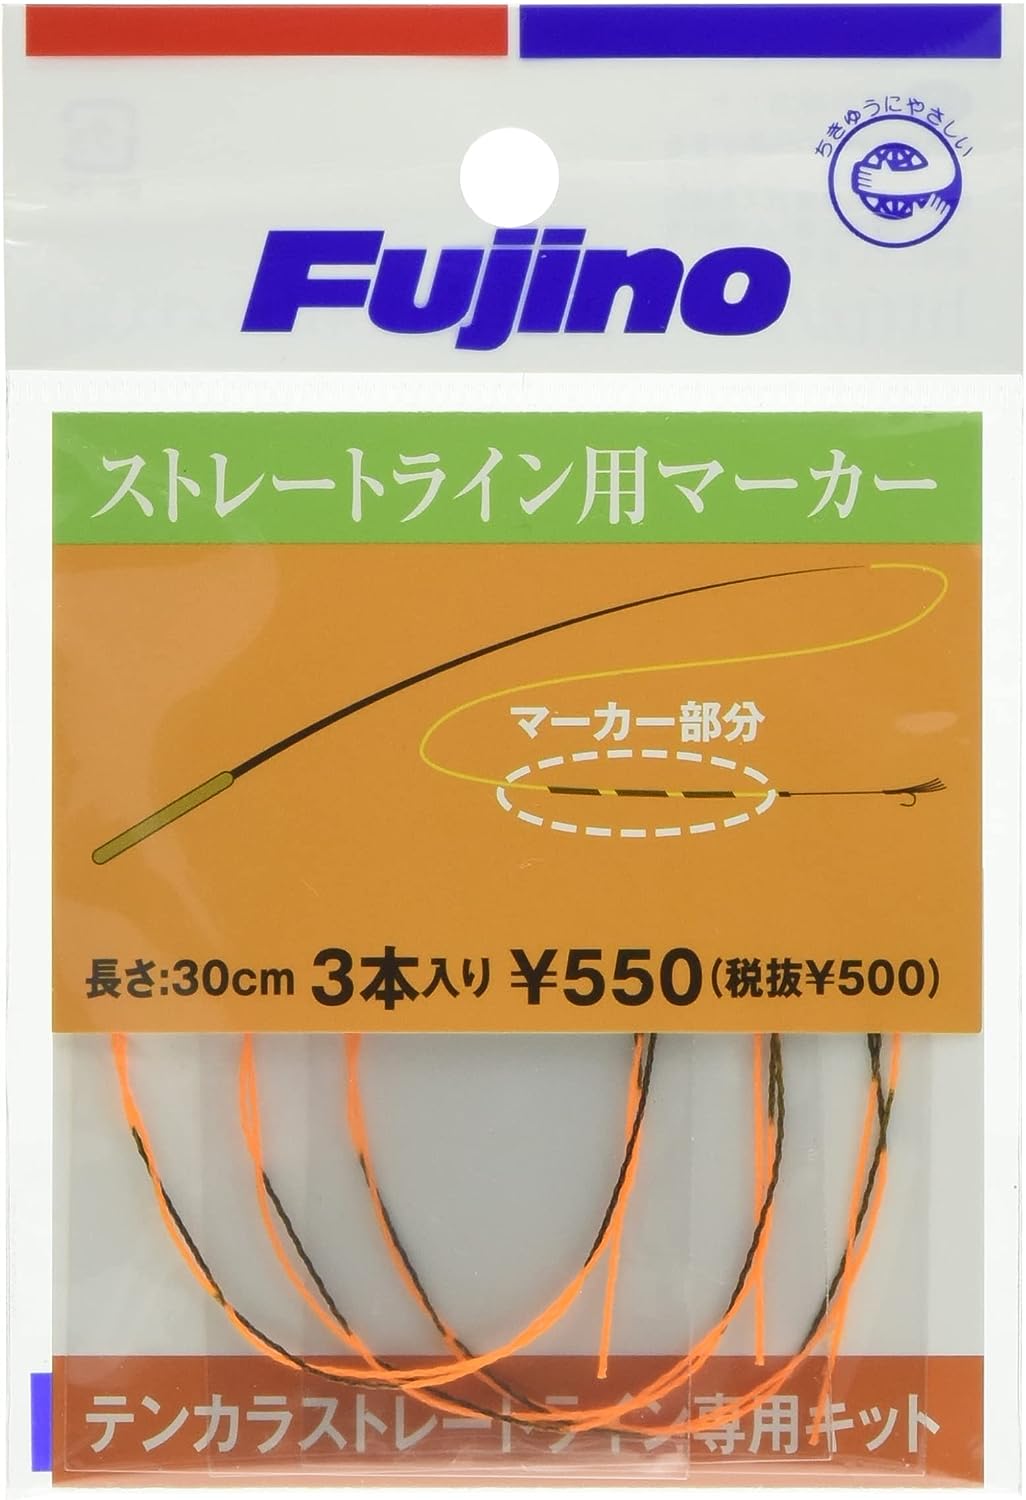 fujino line markers